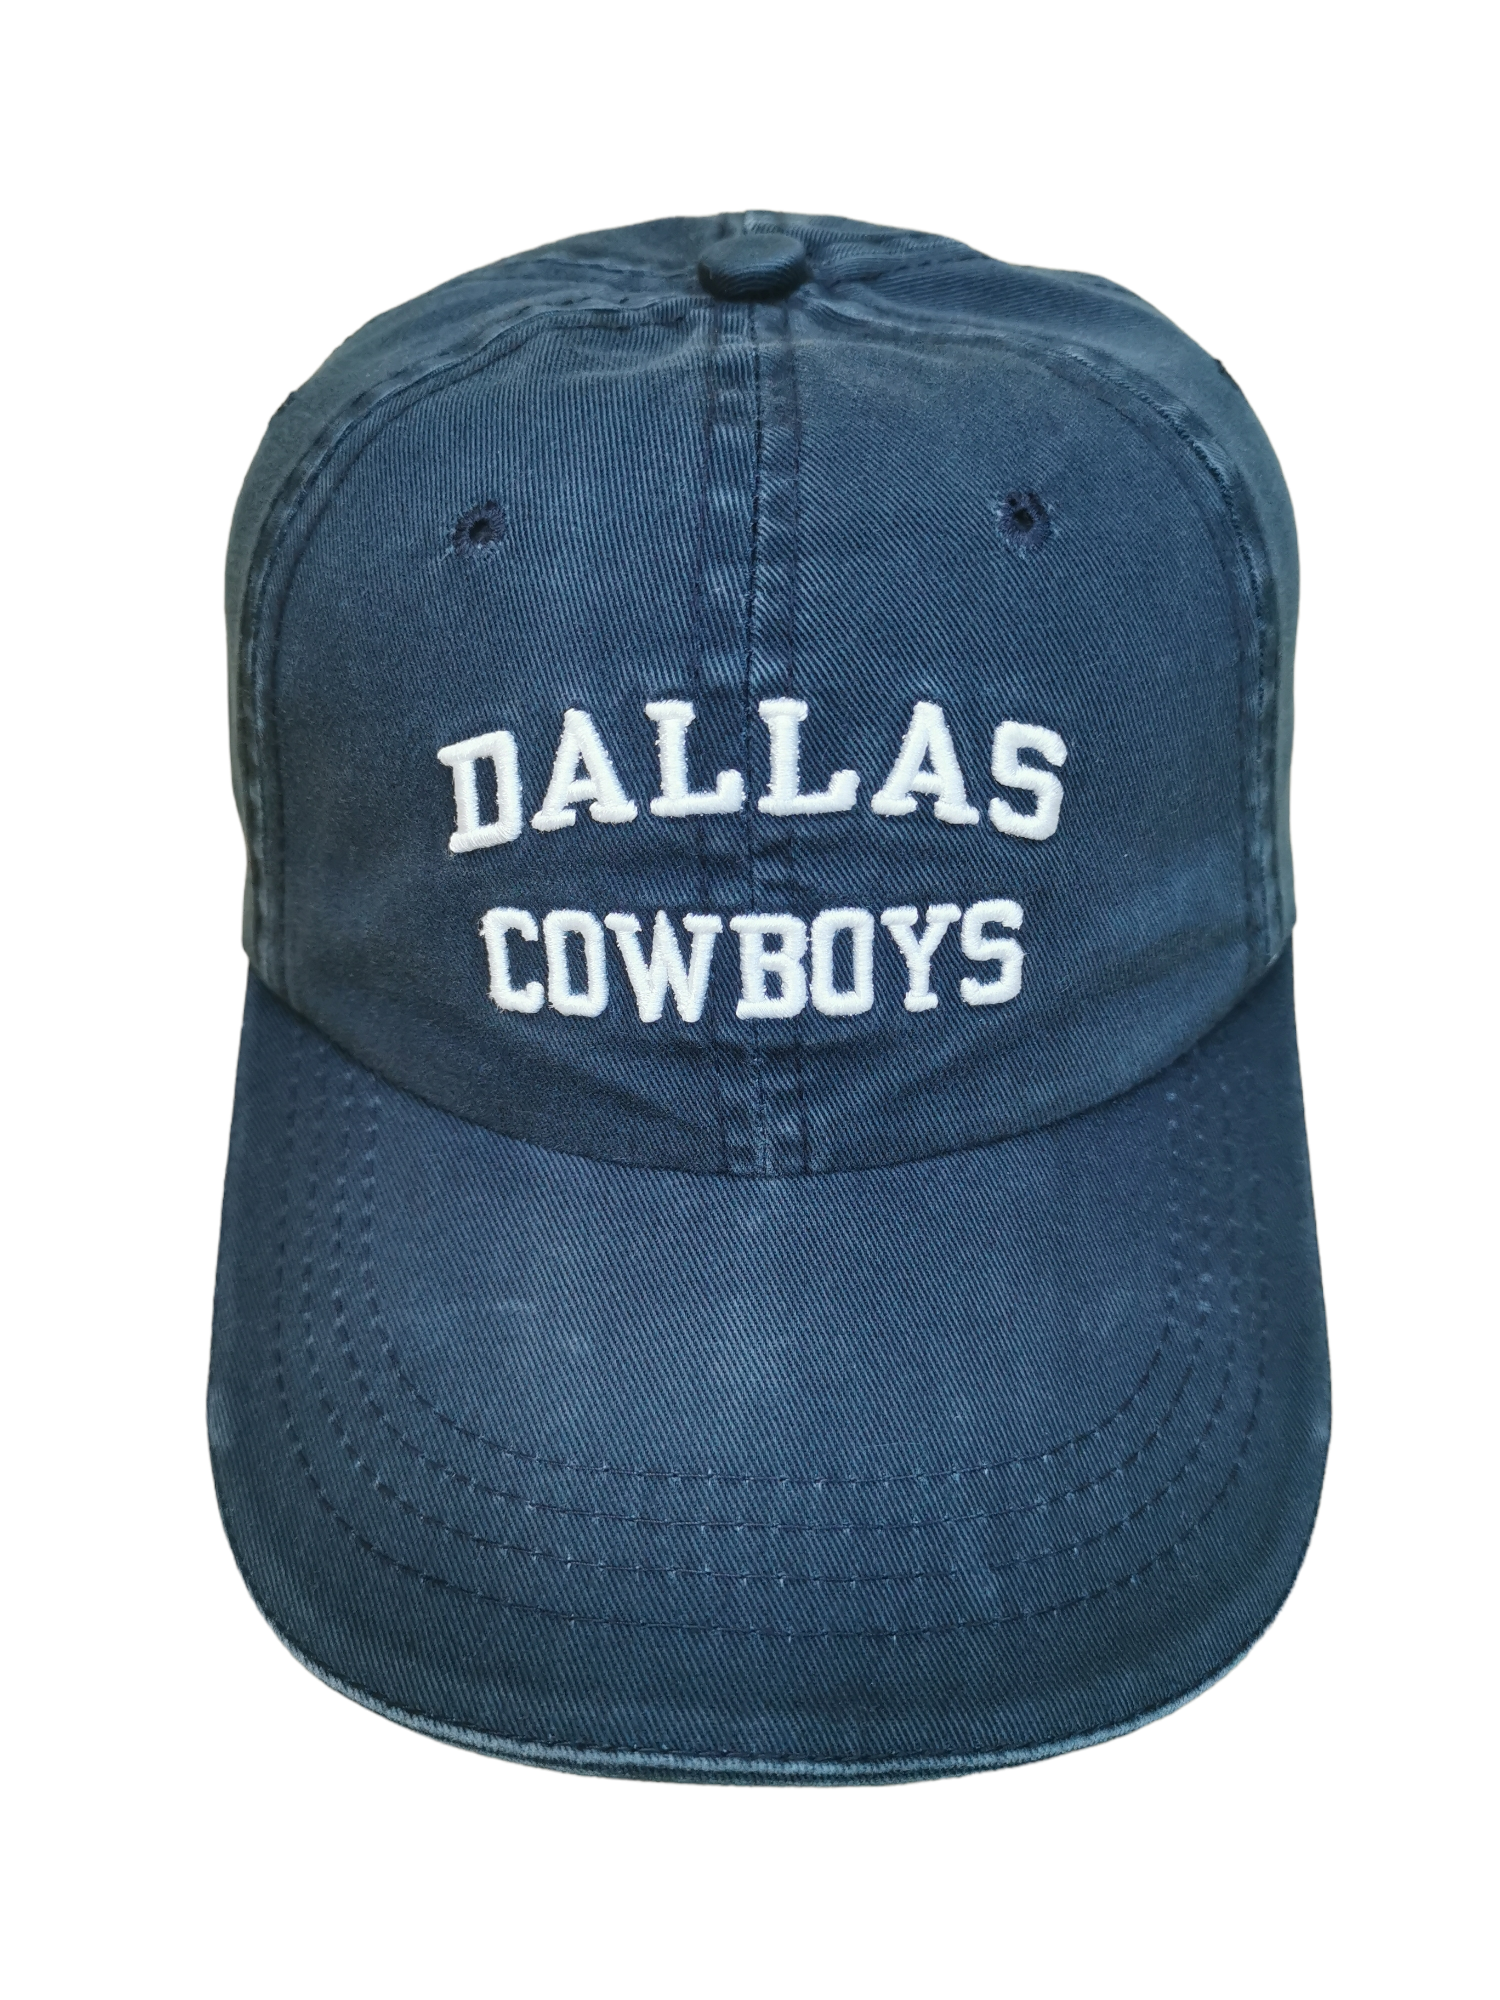 🔥FREE SHIPPING🔥 NFL DALLAS COWBOYS PRO LINE X REEBOK HAT - 1